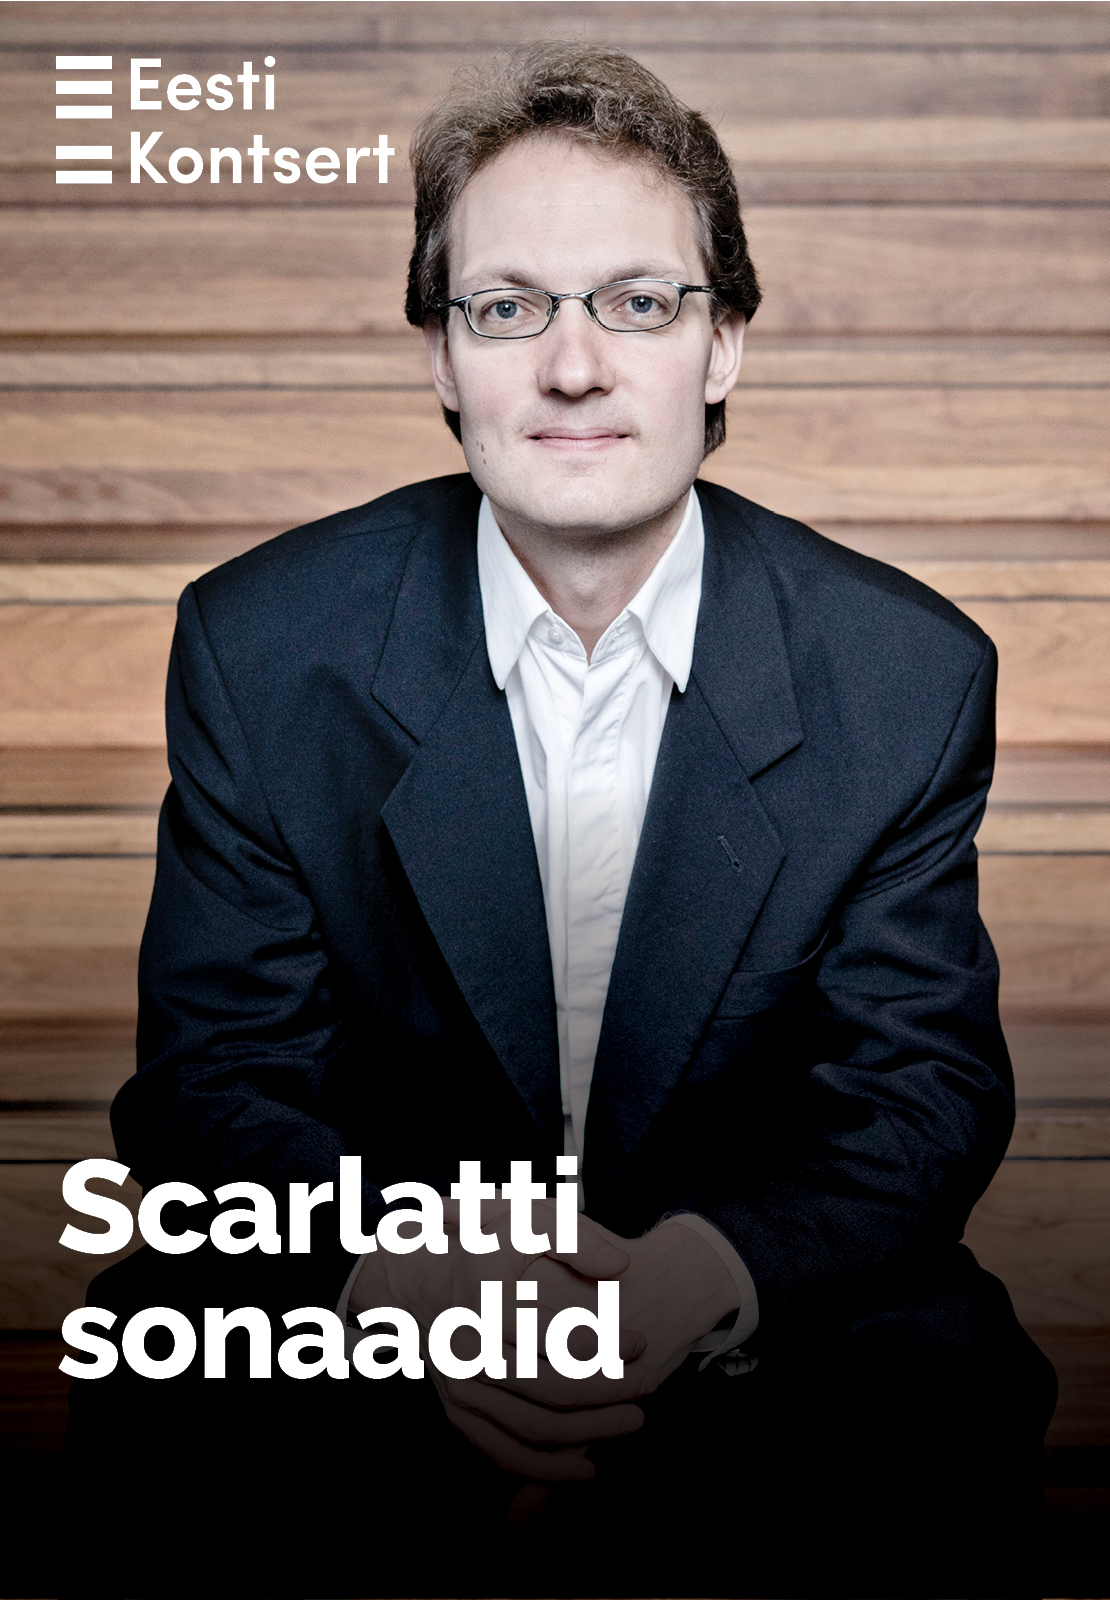 Scarlatti sonaadid – Eesti Kontsert